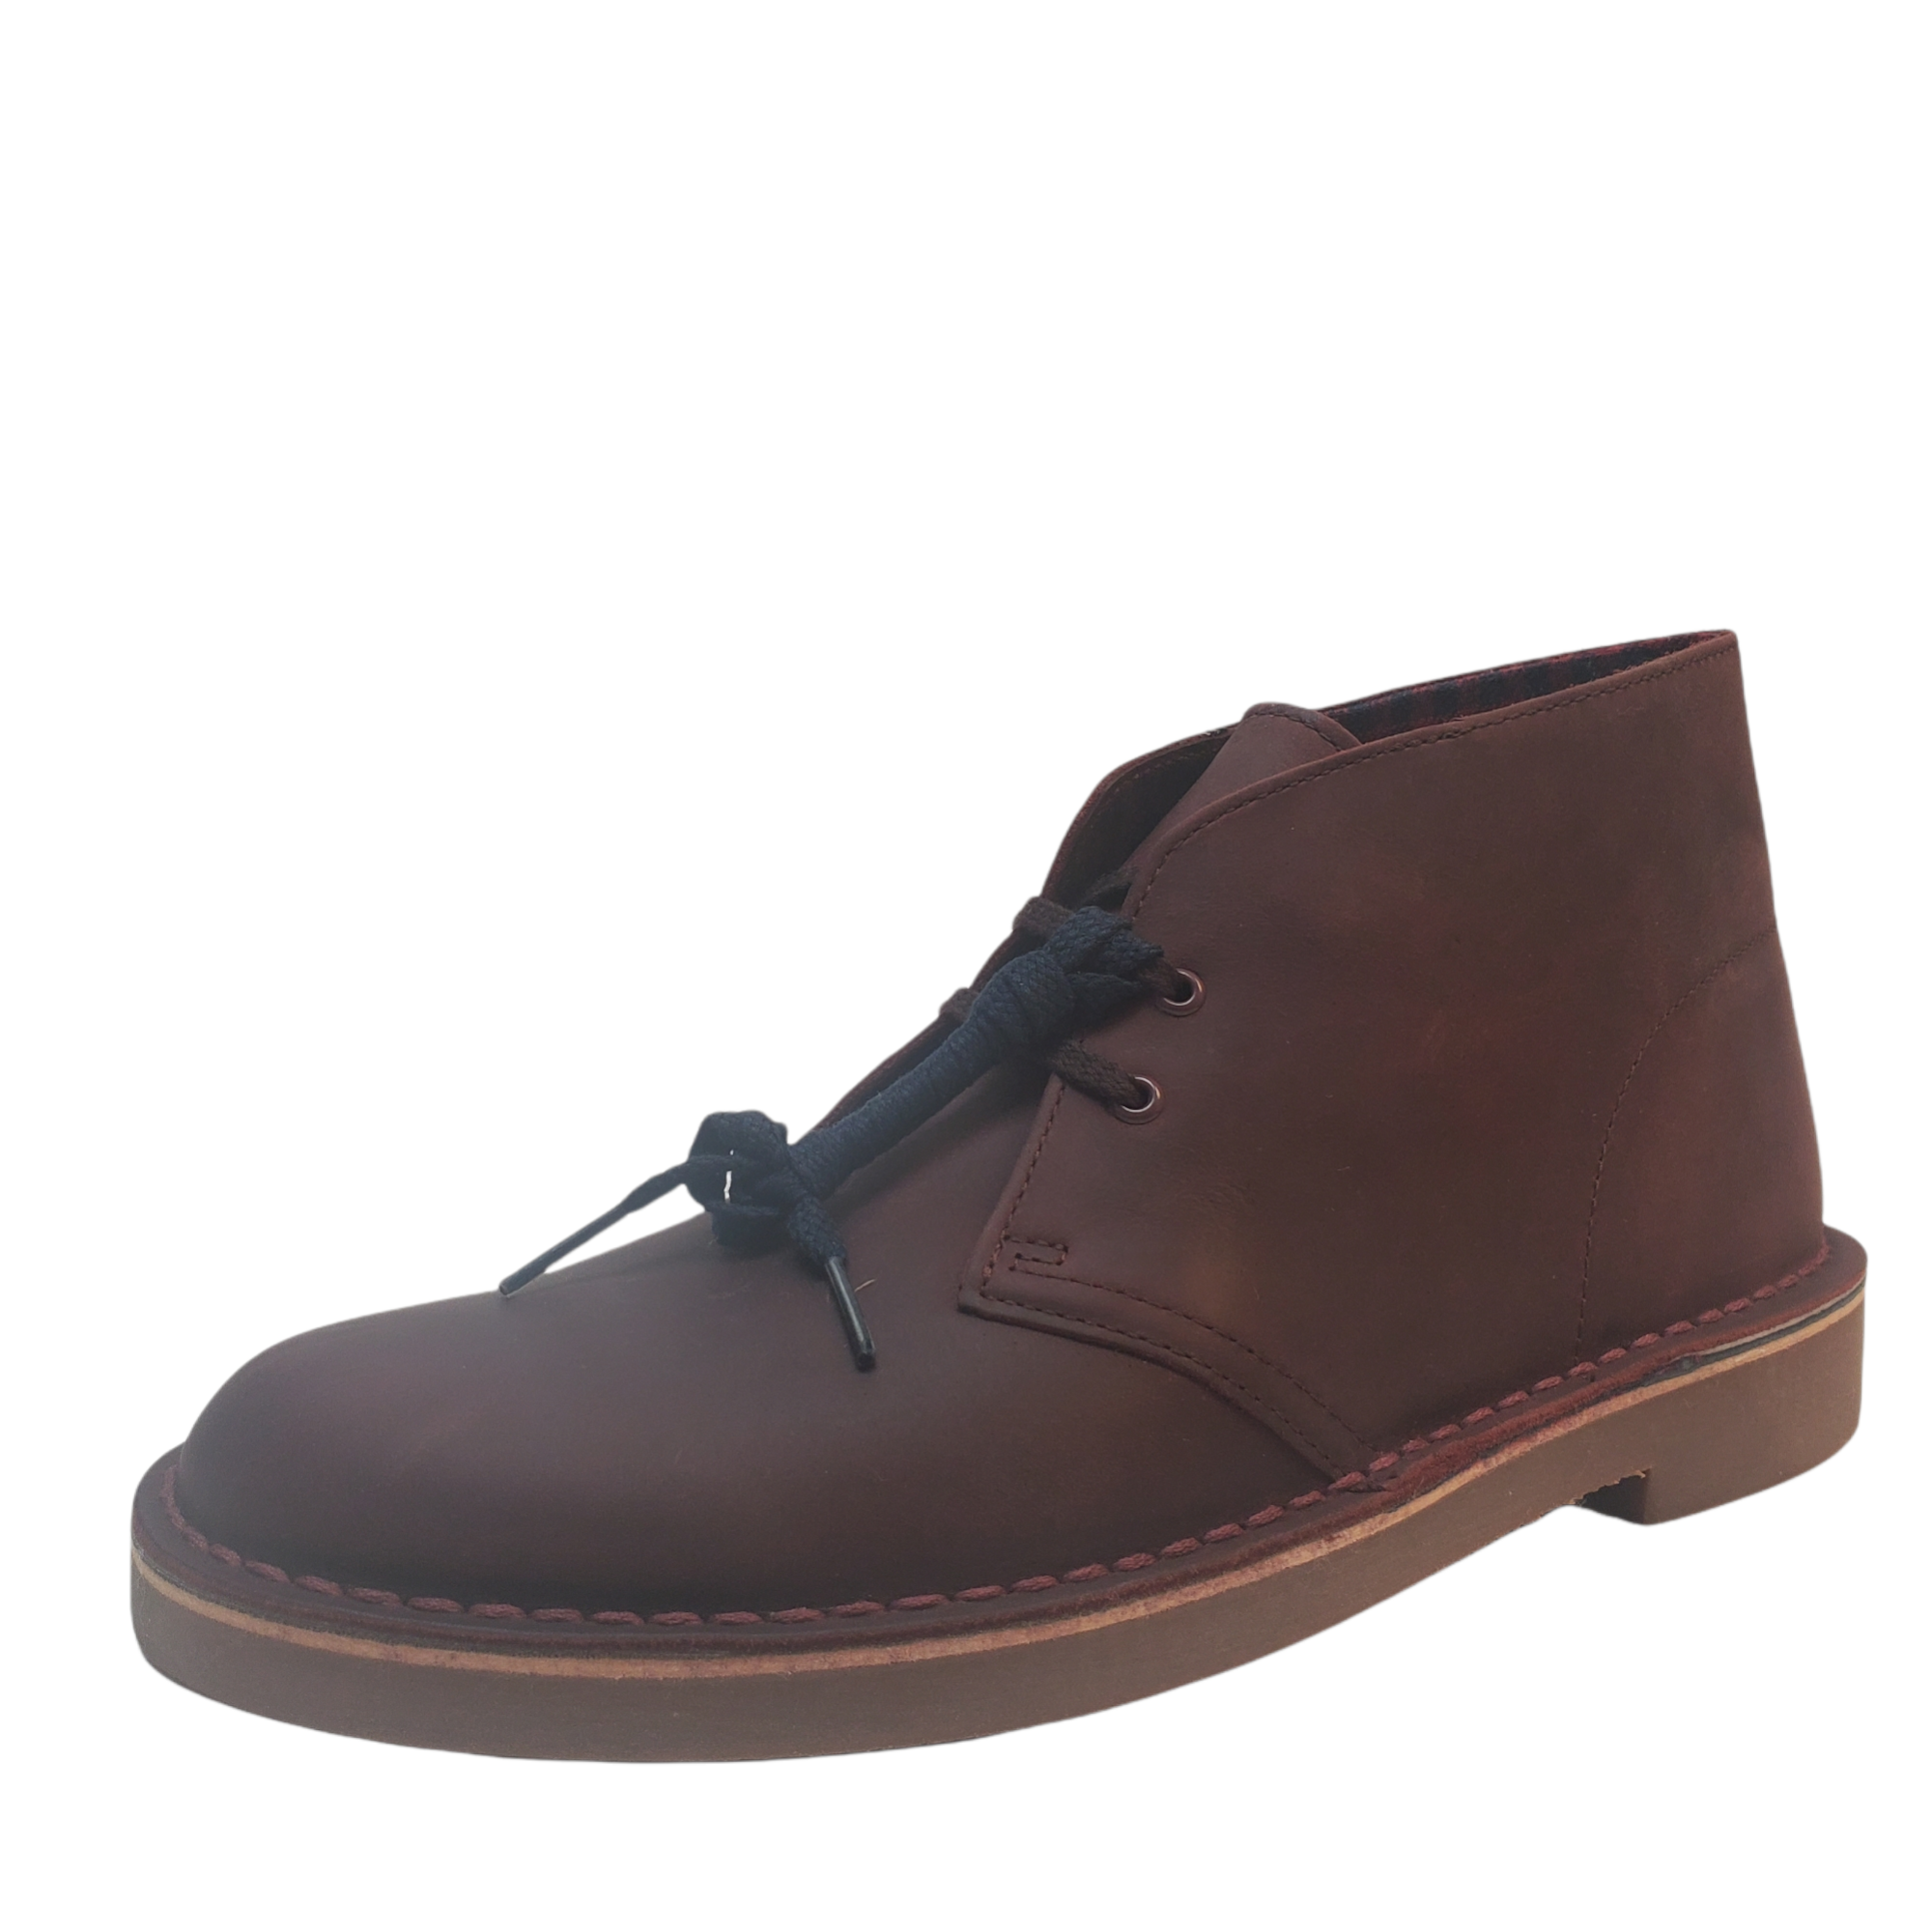 Clarks Leather Chukka boots Bushacre 2 Lace Up Shoes Aubergine 7M Affordable Designer Brands | Affordable Designer Brands